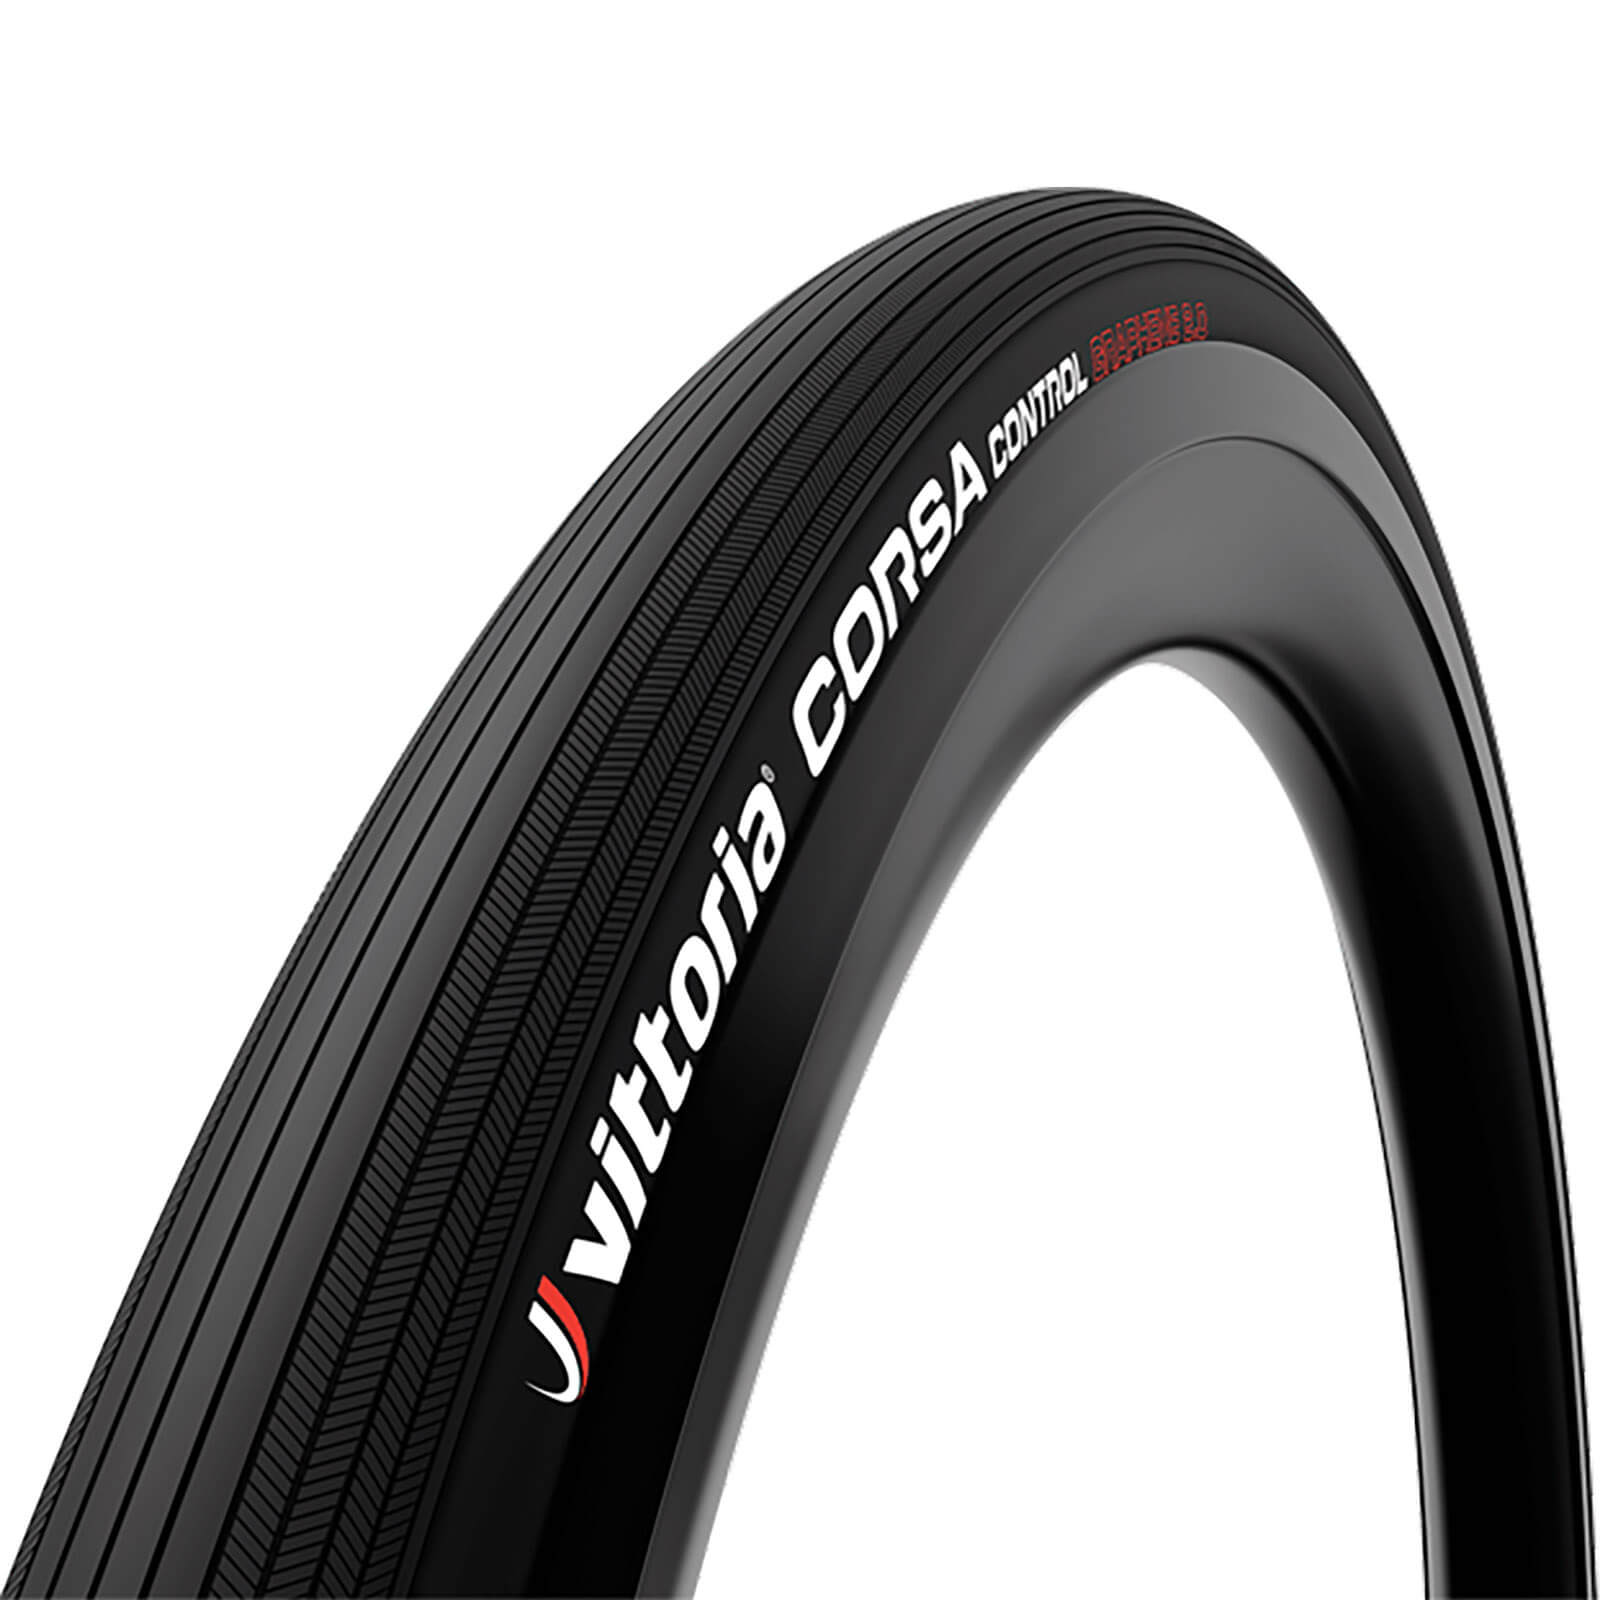 Vittoria Corsa Control G2.0 Road Tyre - 700x25mm - Full Black